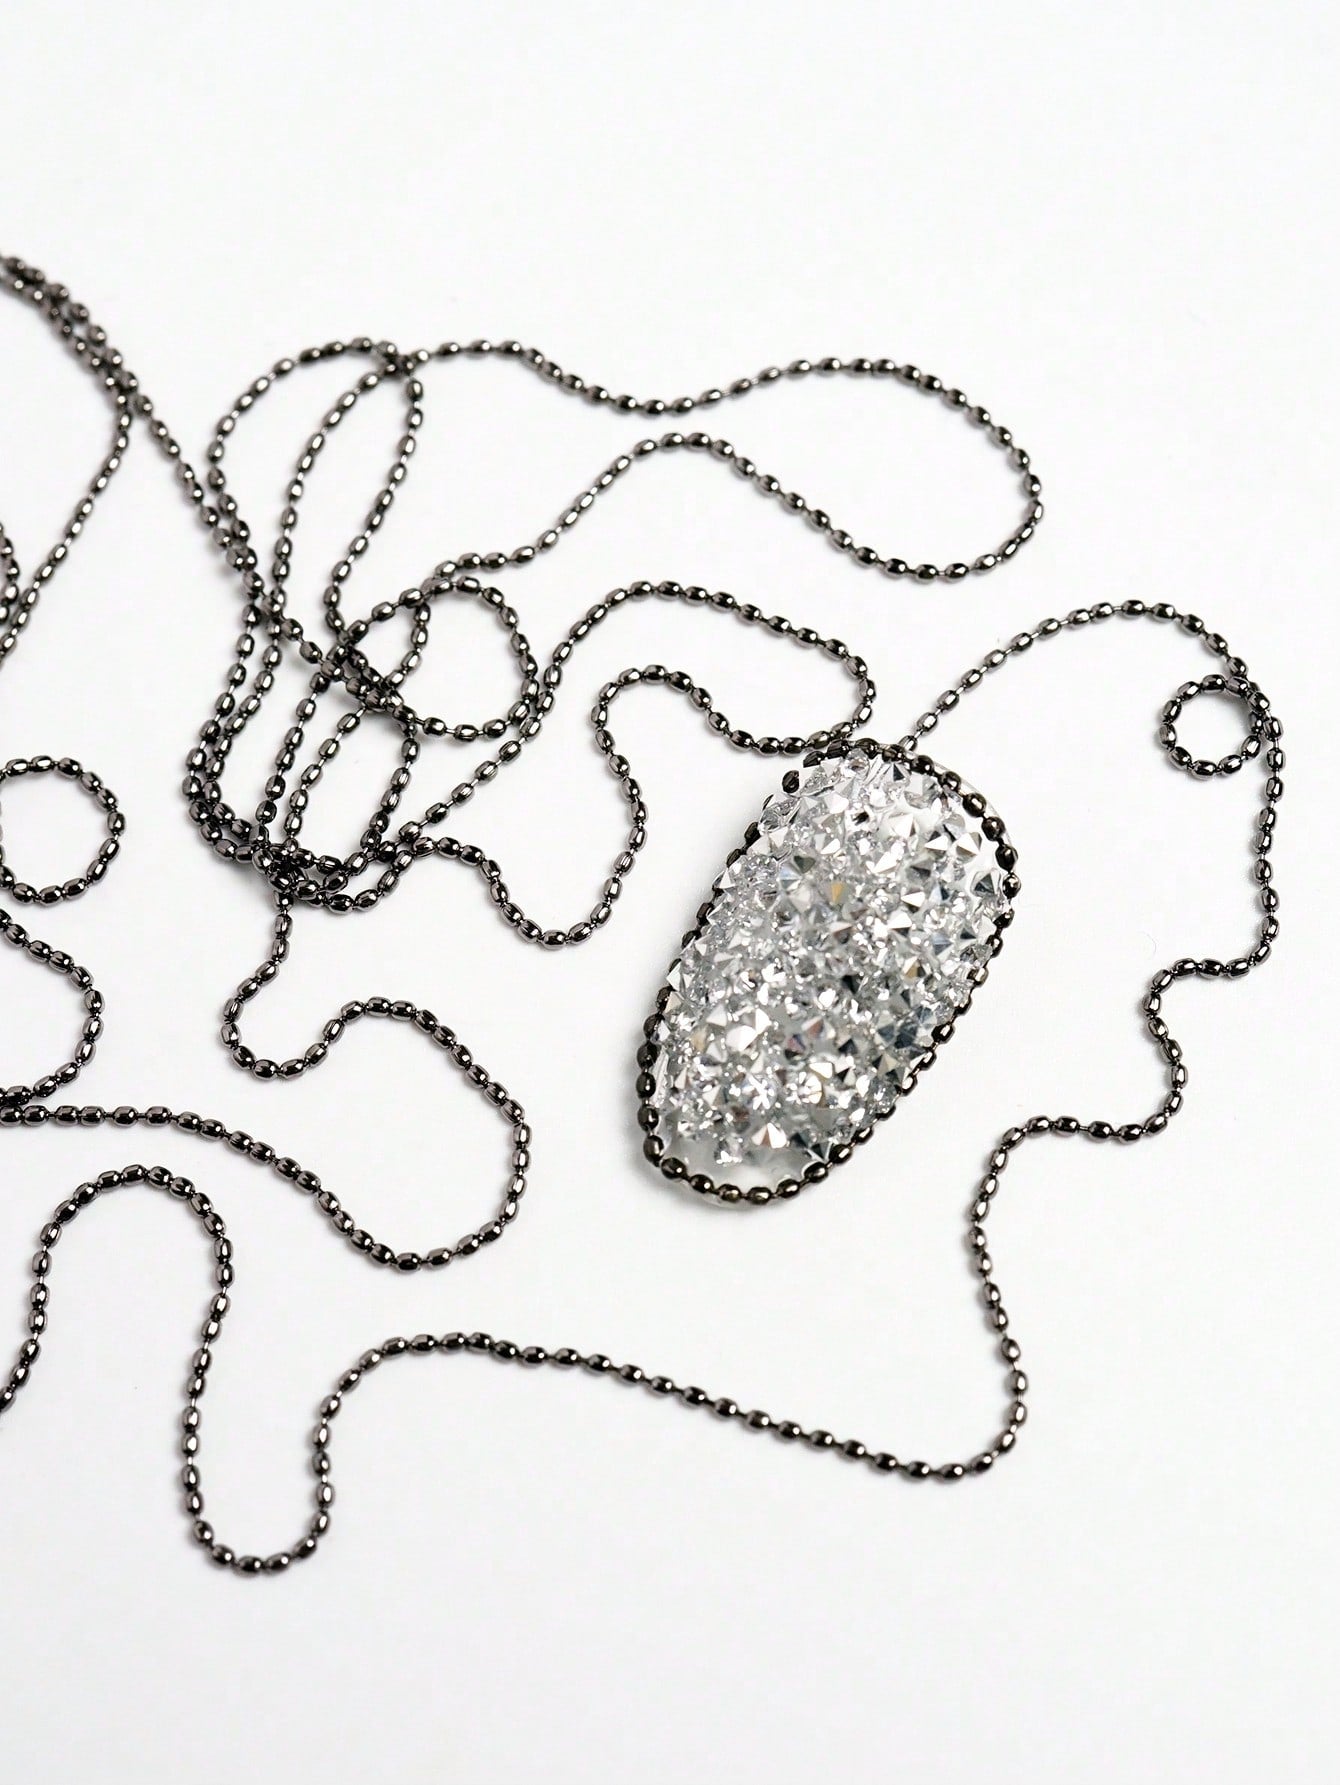 Nail Decoration, 1pack Metre Black Chain Stone Bead Metal Steel Manicure Art Jewelry Accessory Manicure